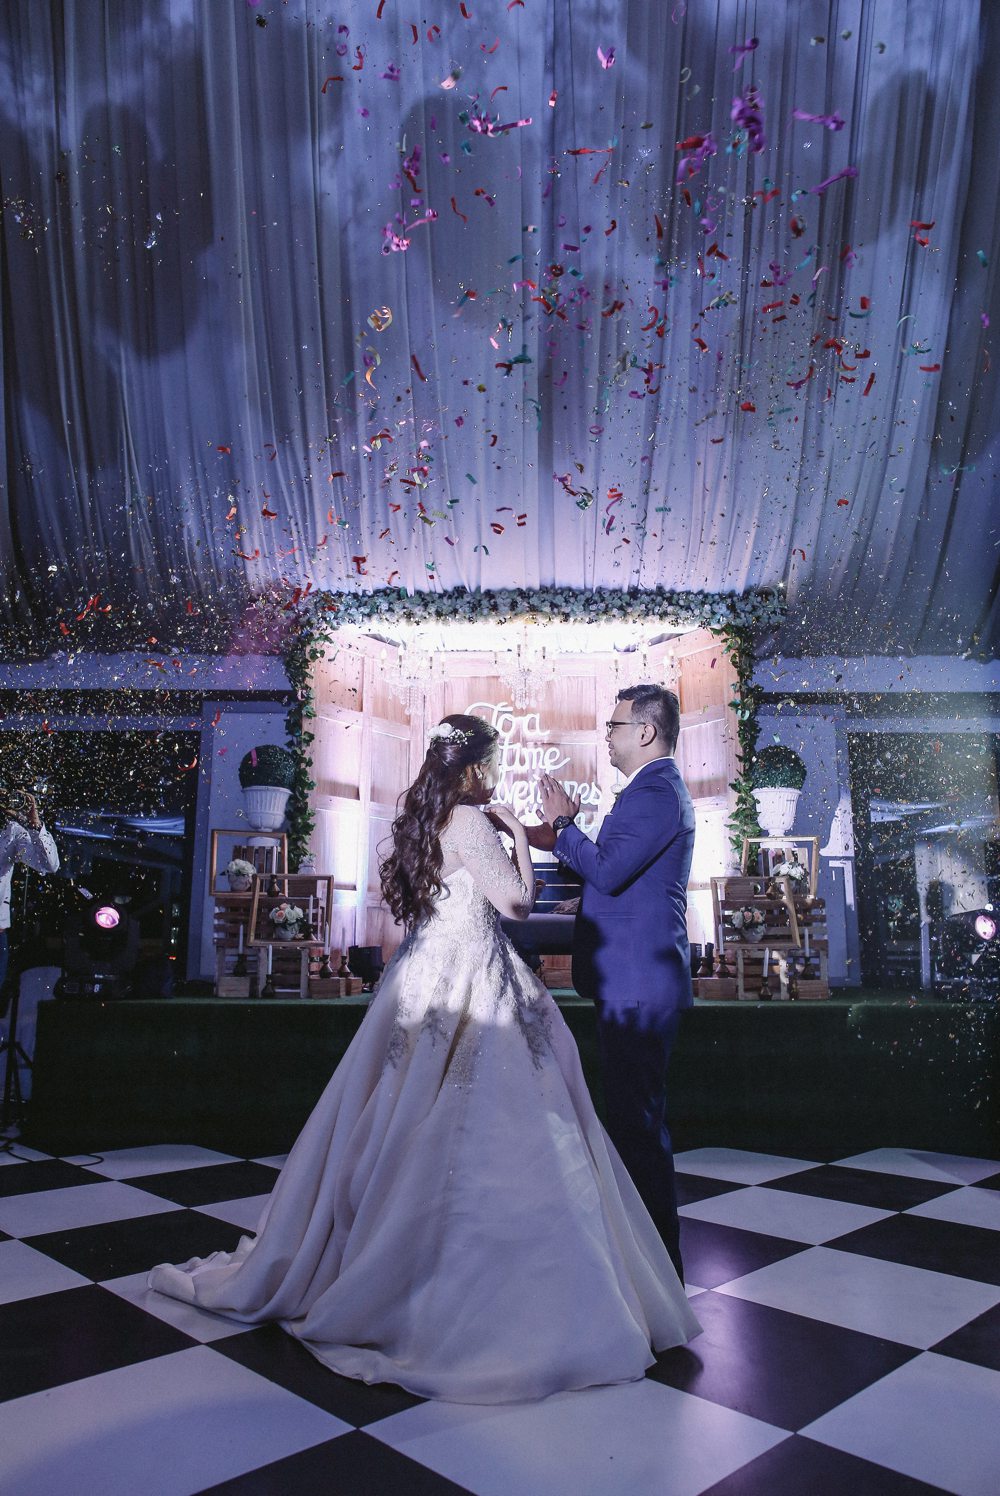 Dennis and Jeszel Hillcreek Tagaytay Wedding Photography by Jayson and Joanne Arquiza